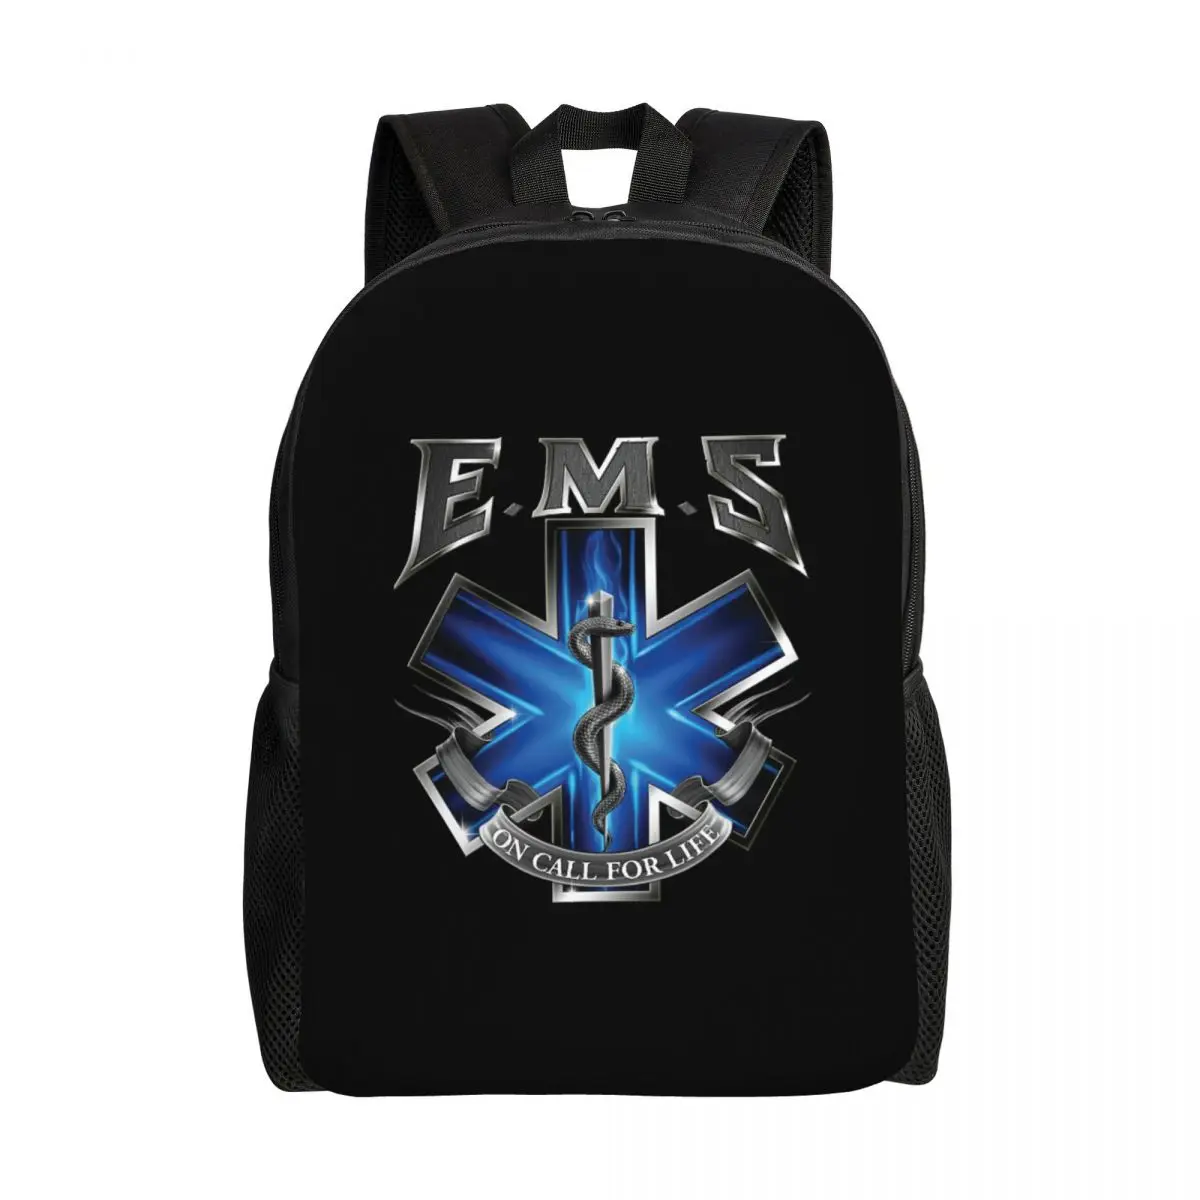 

Ems Star Of Life Backpacks for Men Women School College Student Bookbag Fits 15 Inch Laptop Emt Paramedic Medical Bags